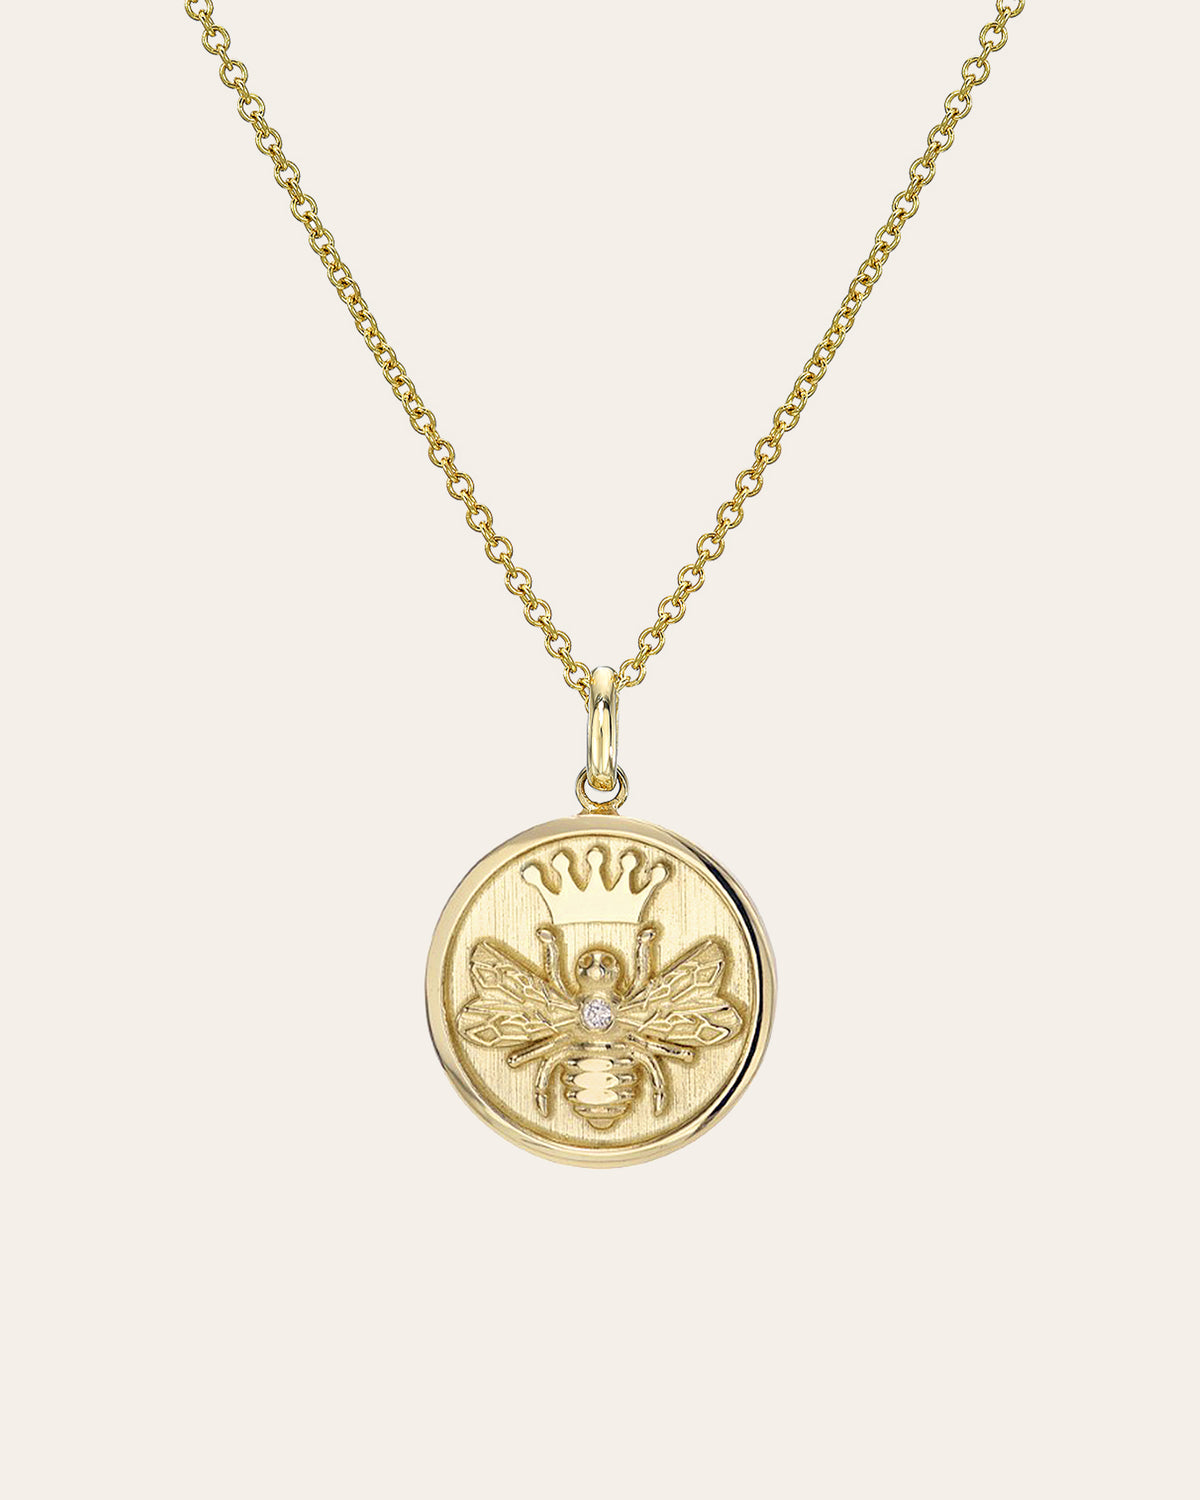 14k Gold Diamond Queen Bee Medallion Necklace